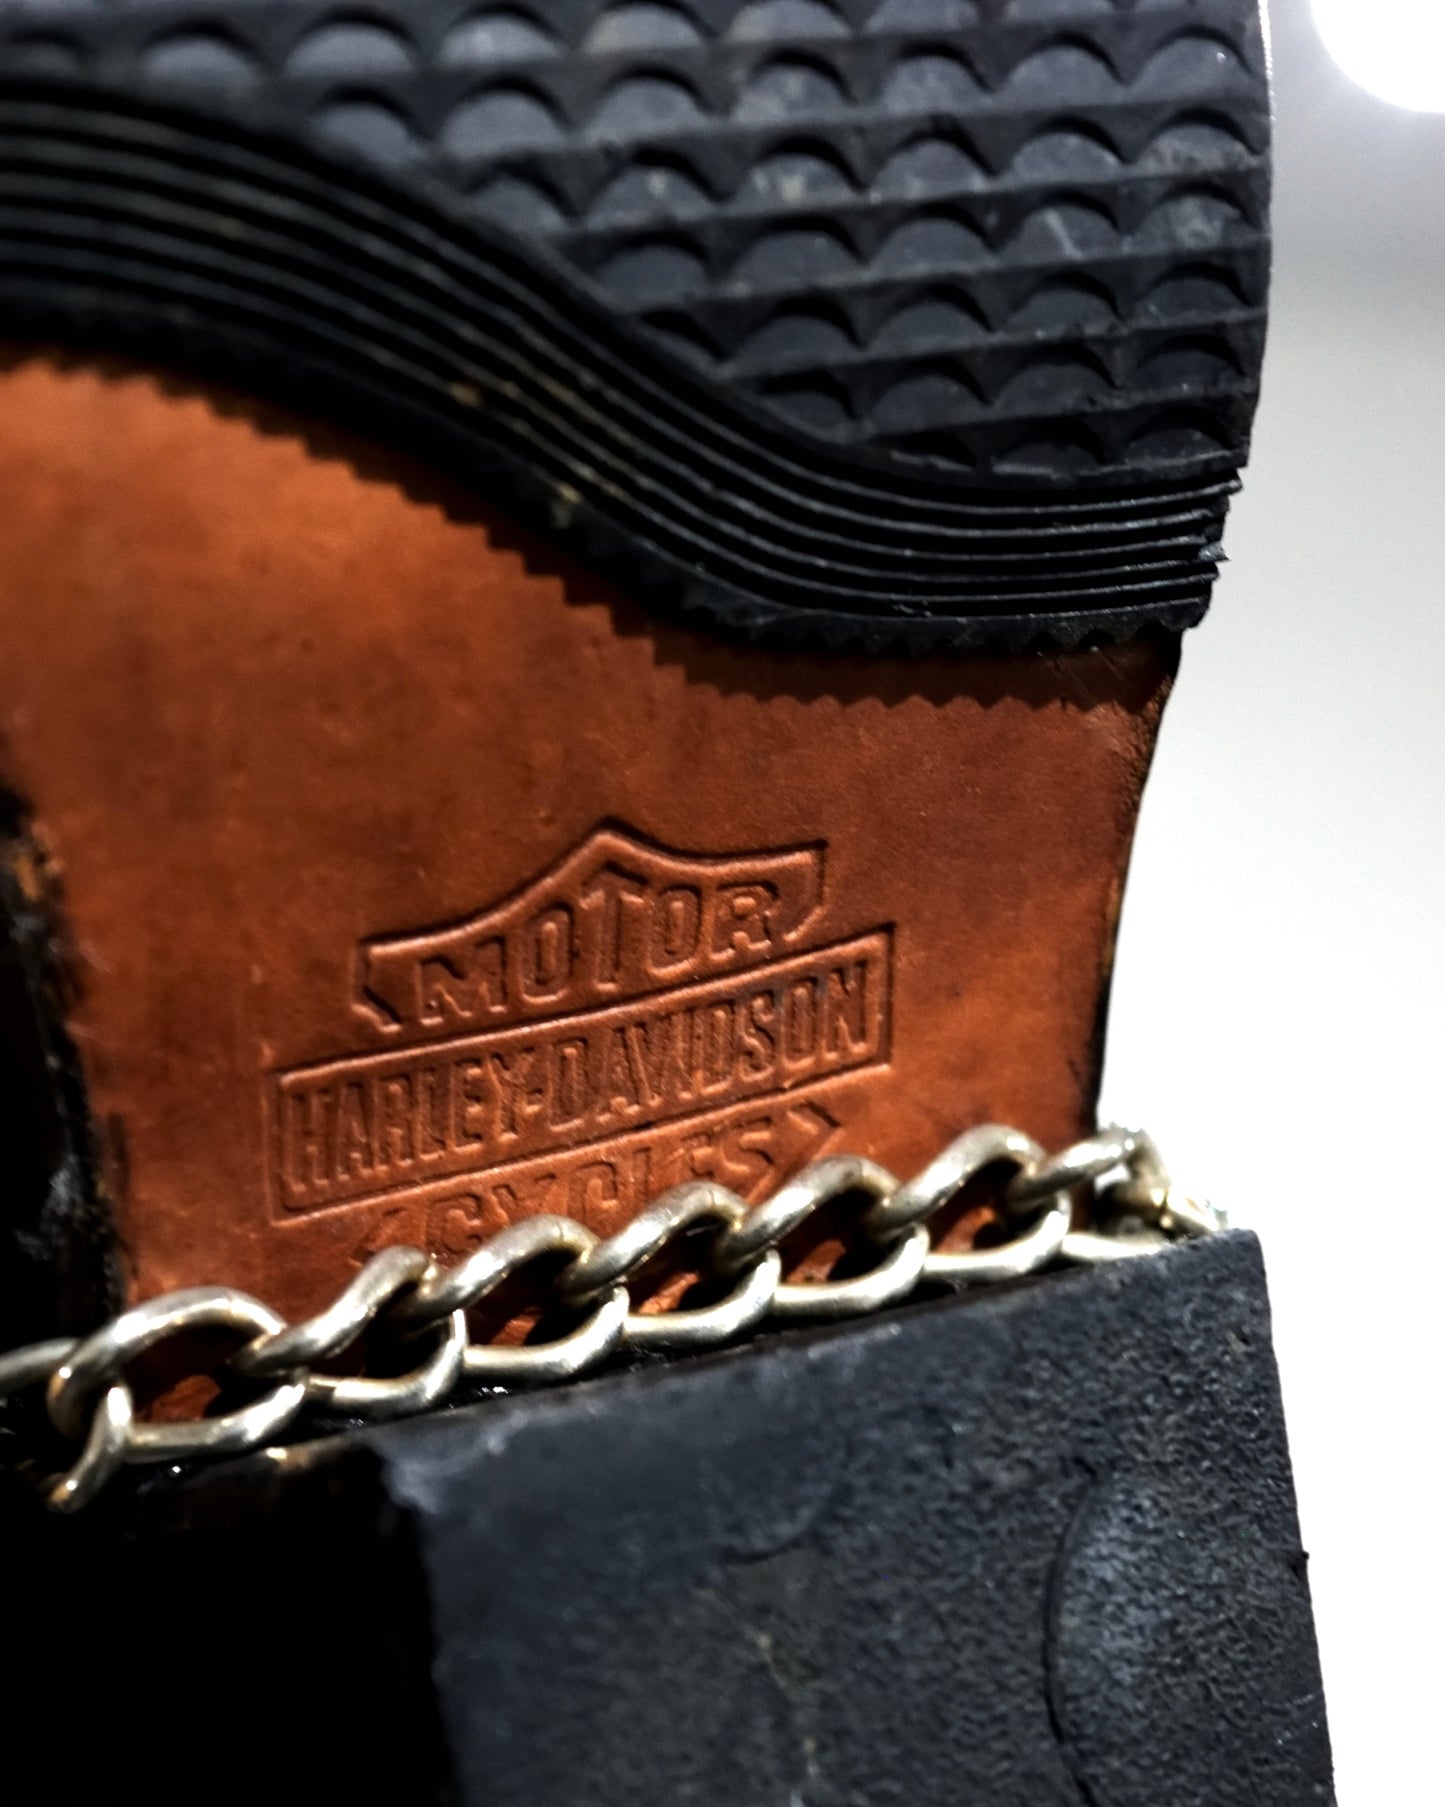 "Harley Davidson" Iron Western Boots